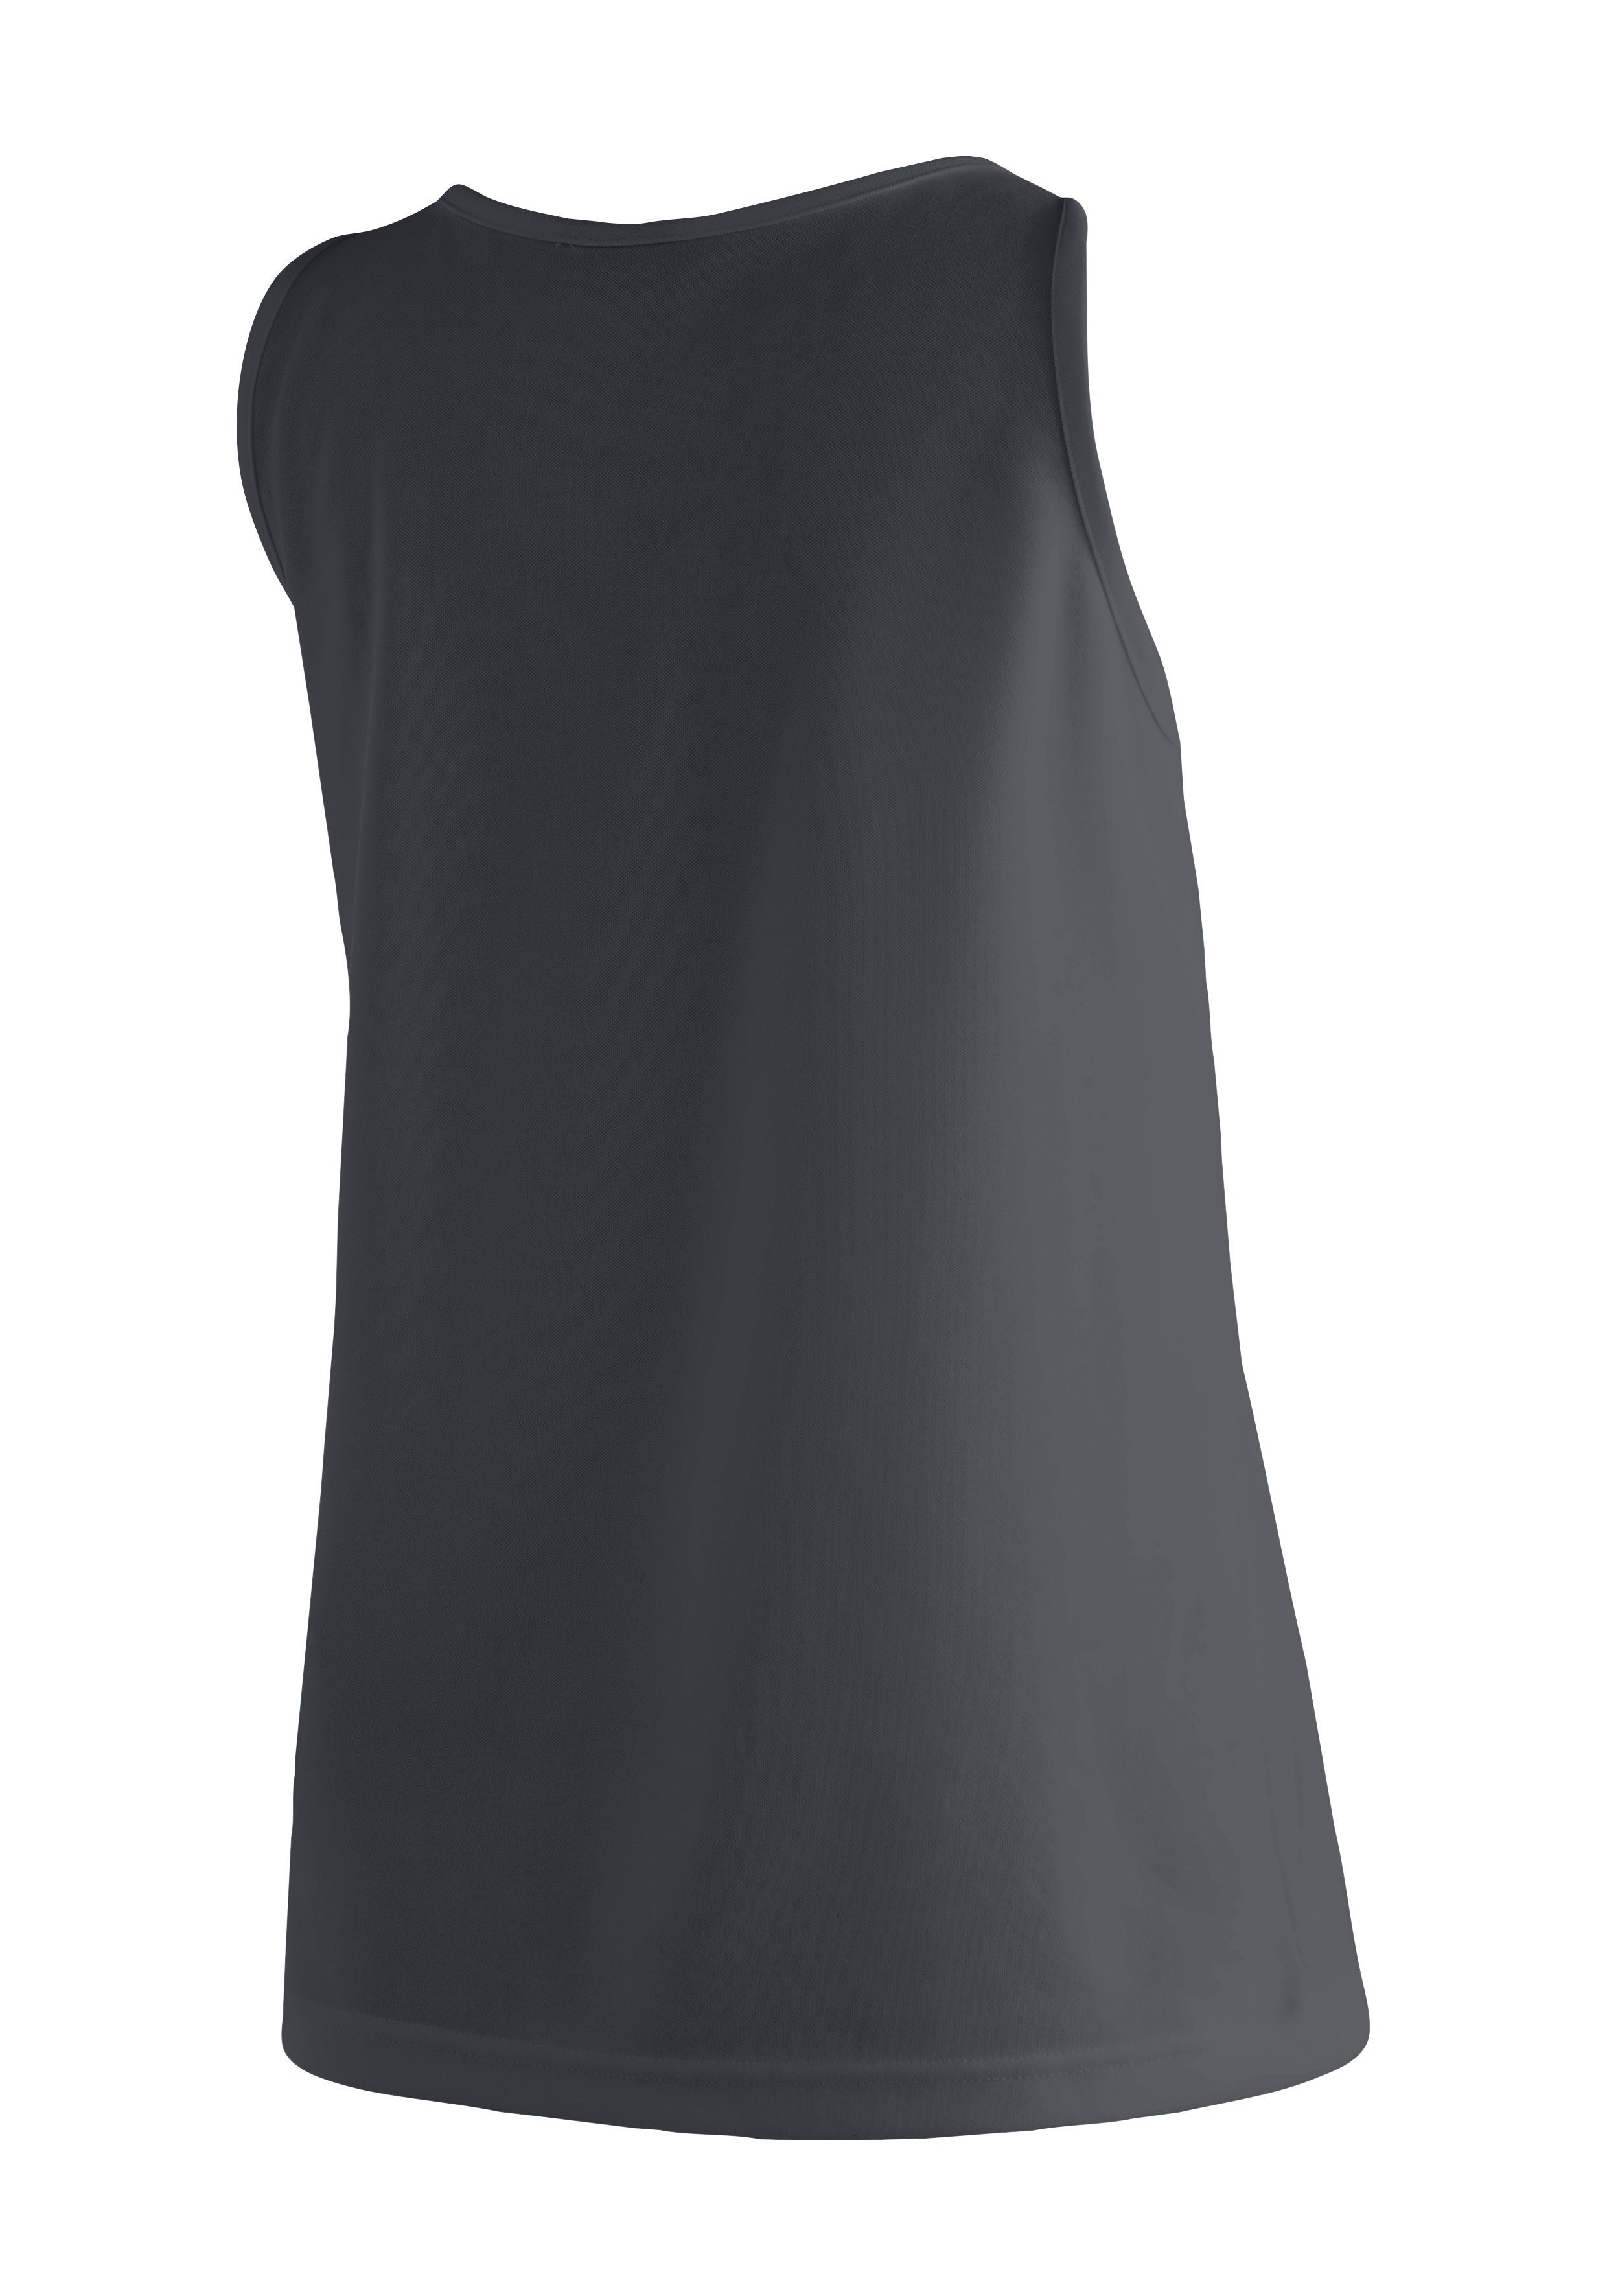 Maier Sports Funktionsshirt Petra Damen Tank-Top für Sport und Outdoor-Aktivitäten, ärmelloses Shirt schwarz